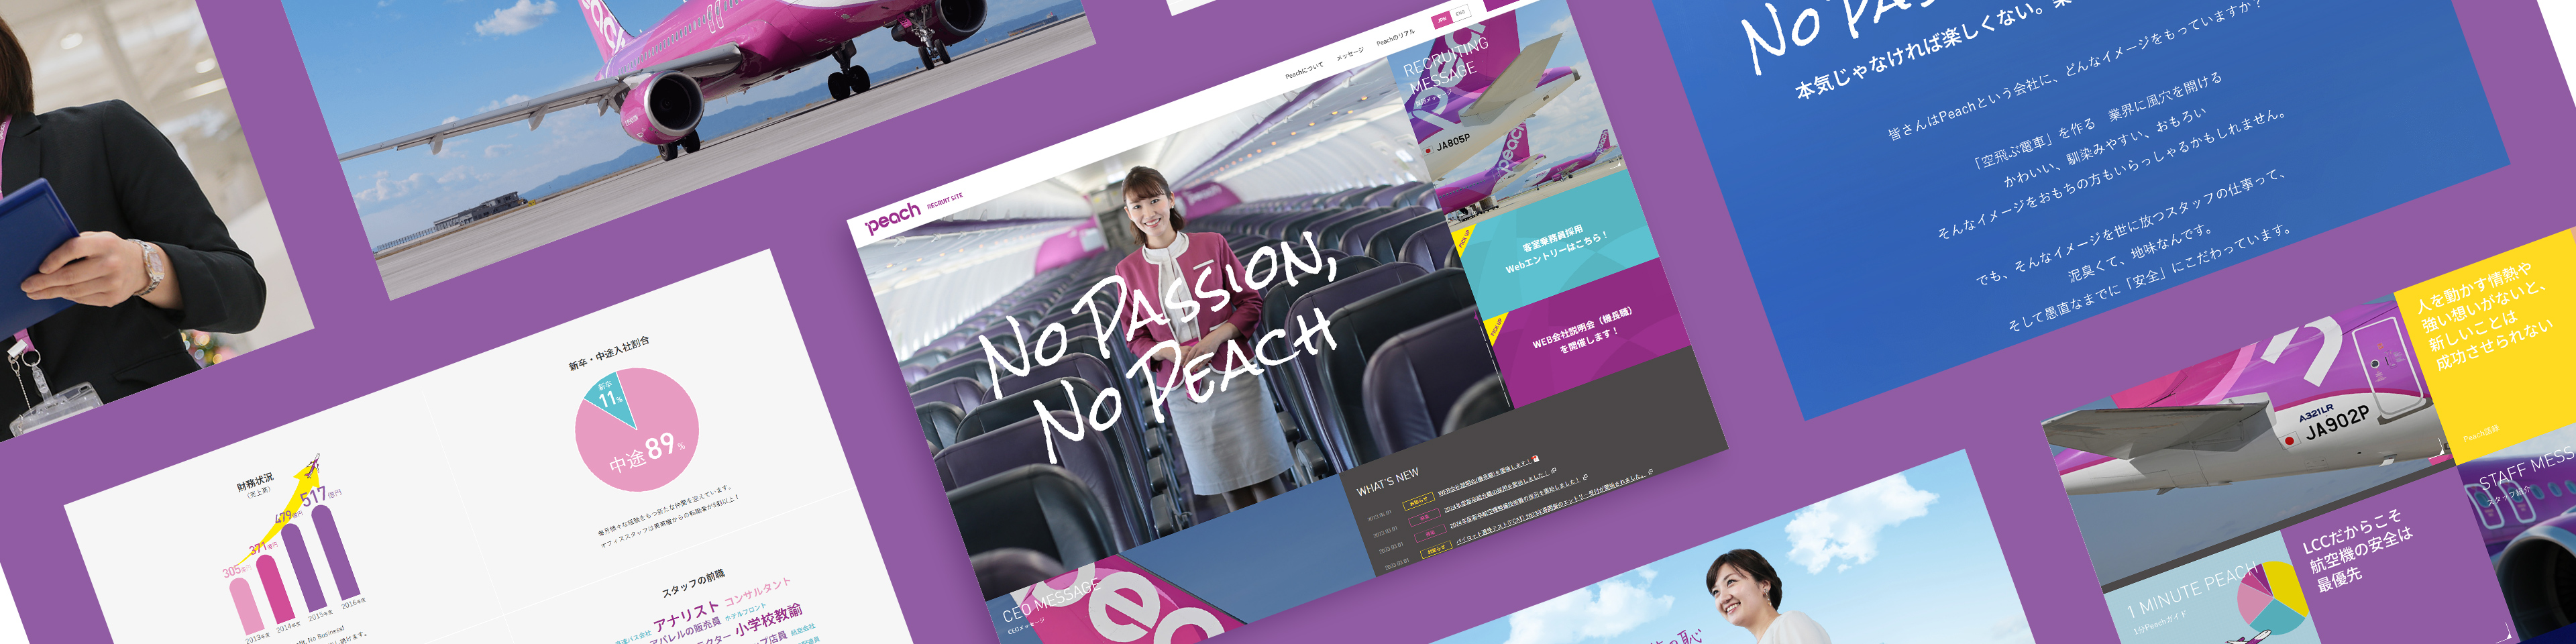 Peach Aviation株式会社
採用サイト